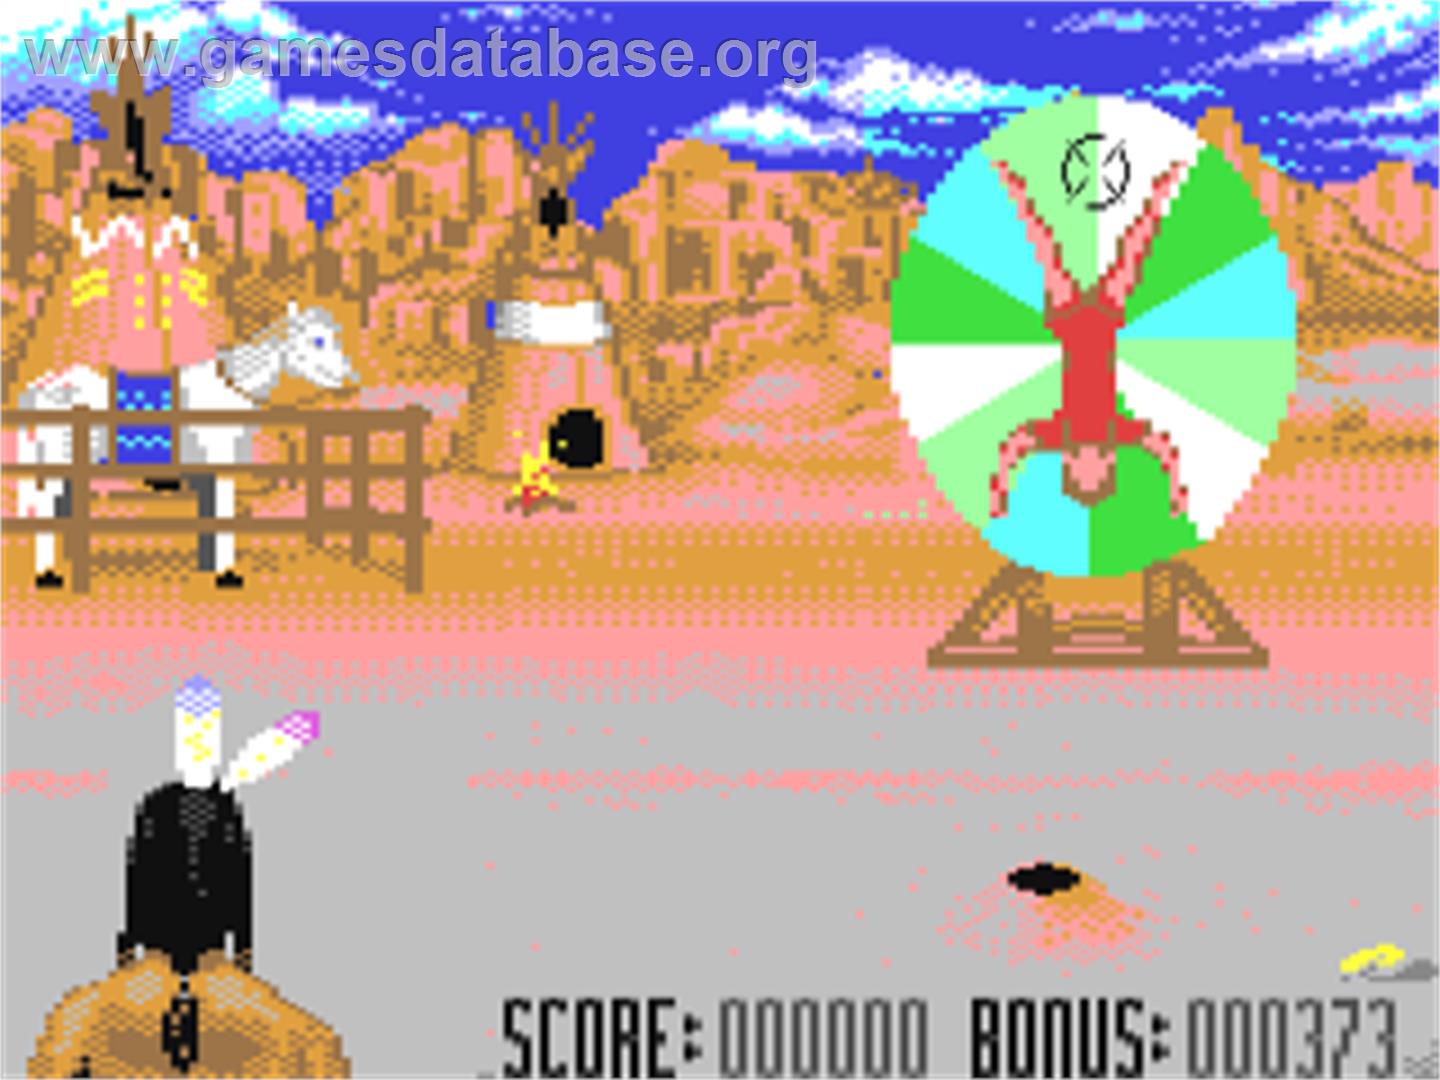 Buffalo Bill's Wild West Show - Commodore 64 - Artwork - Title Screen